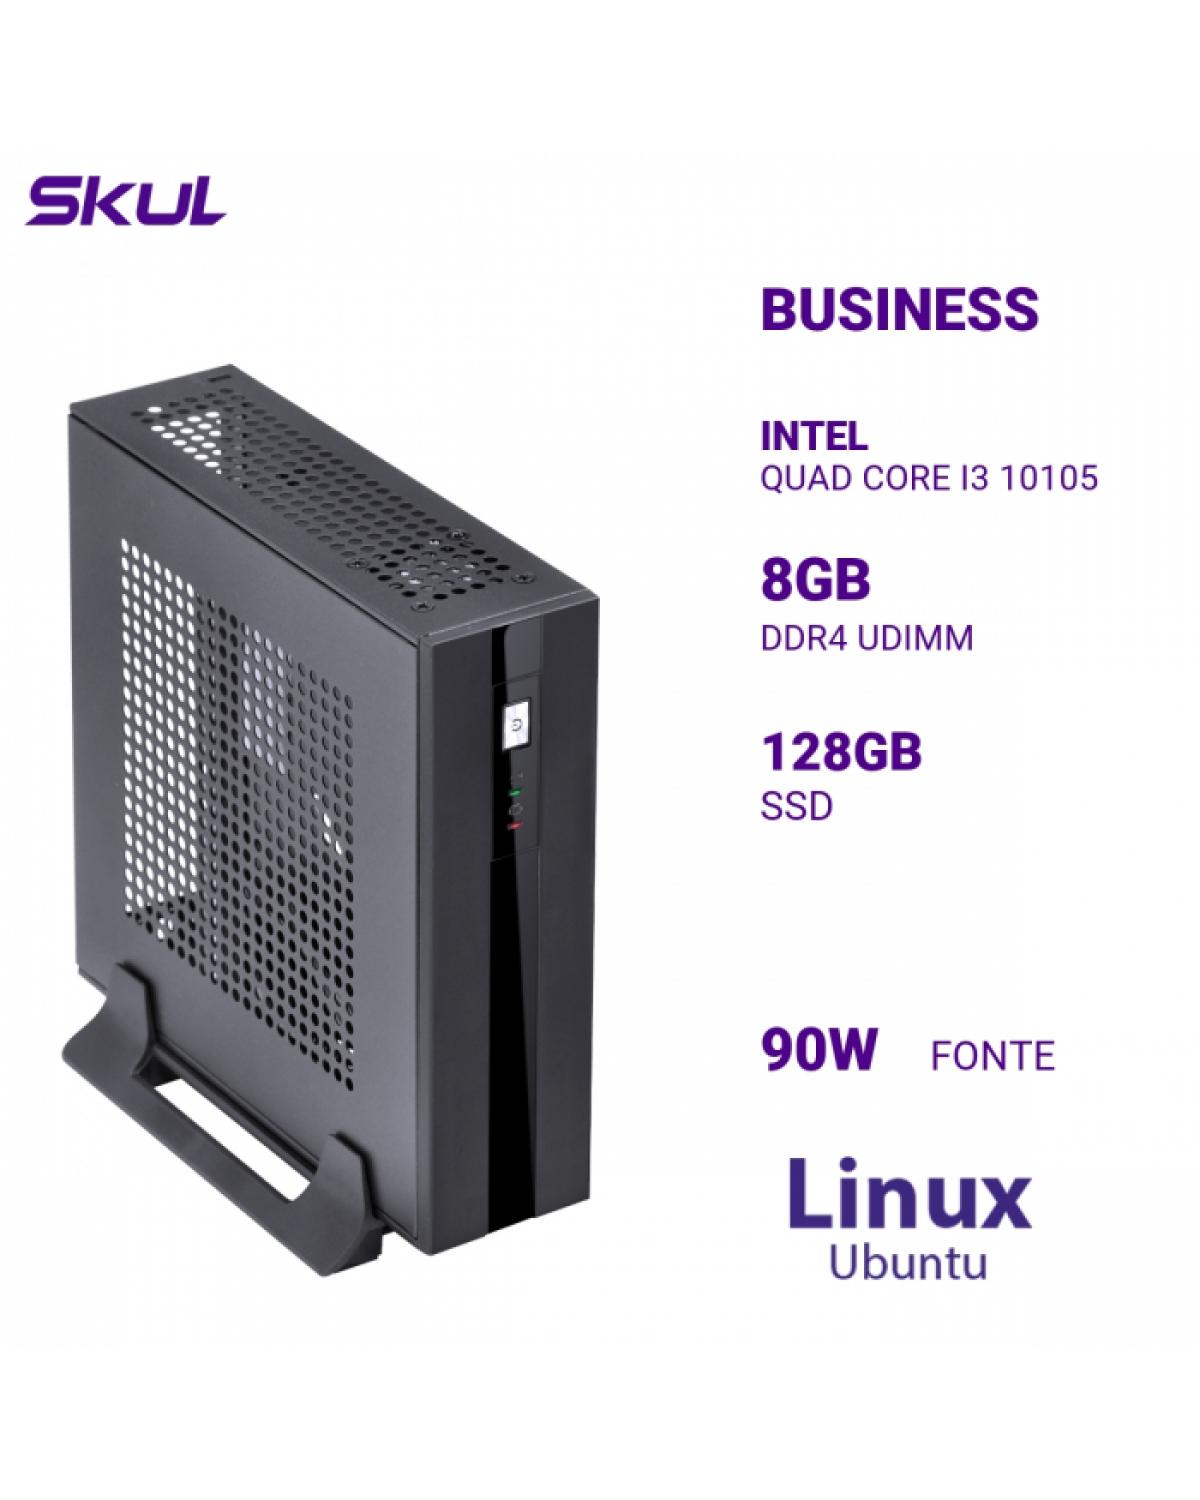 MINI COMPUTADOR BUSINESS B300 QUAD CORE I3 10105 MEM 8GB DDR4 SSD 128GB FONTE 90W LINUX